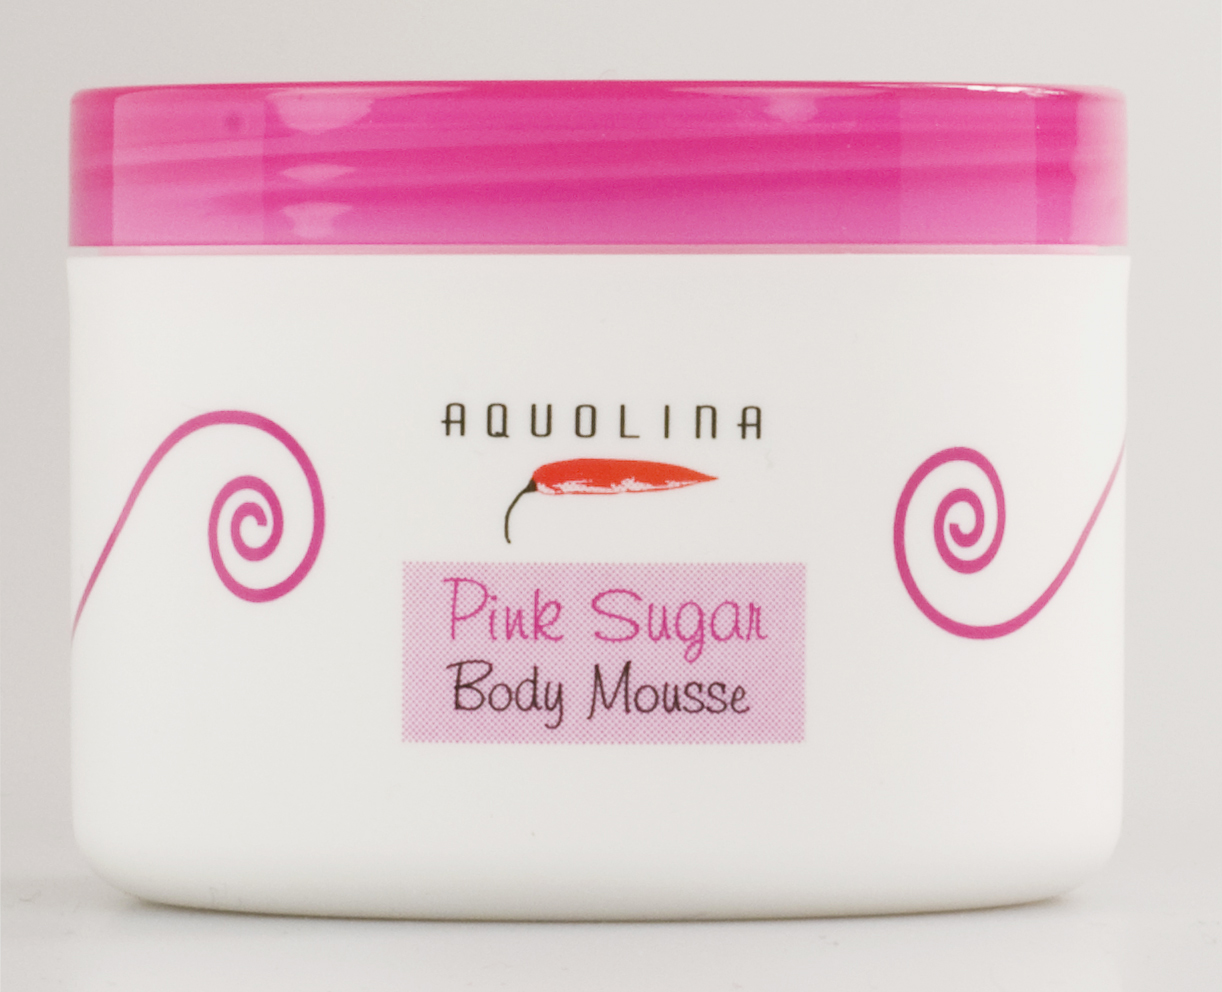 Aqoulina Pink Sugar Body Mousse